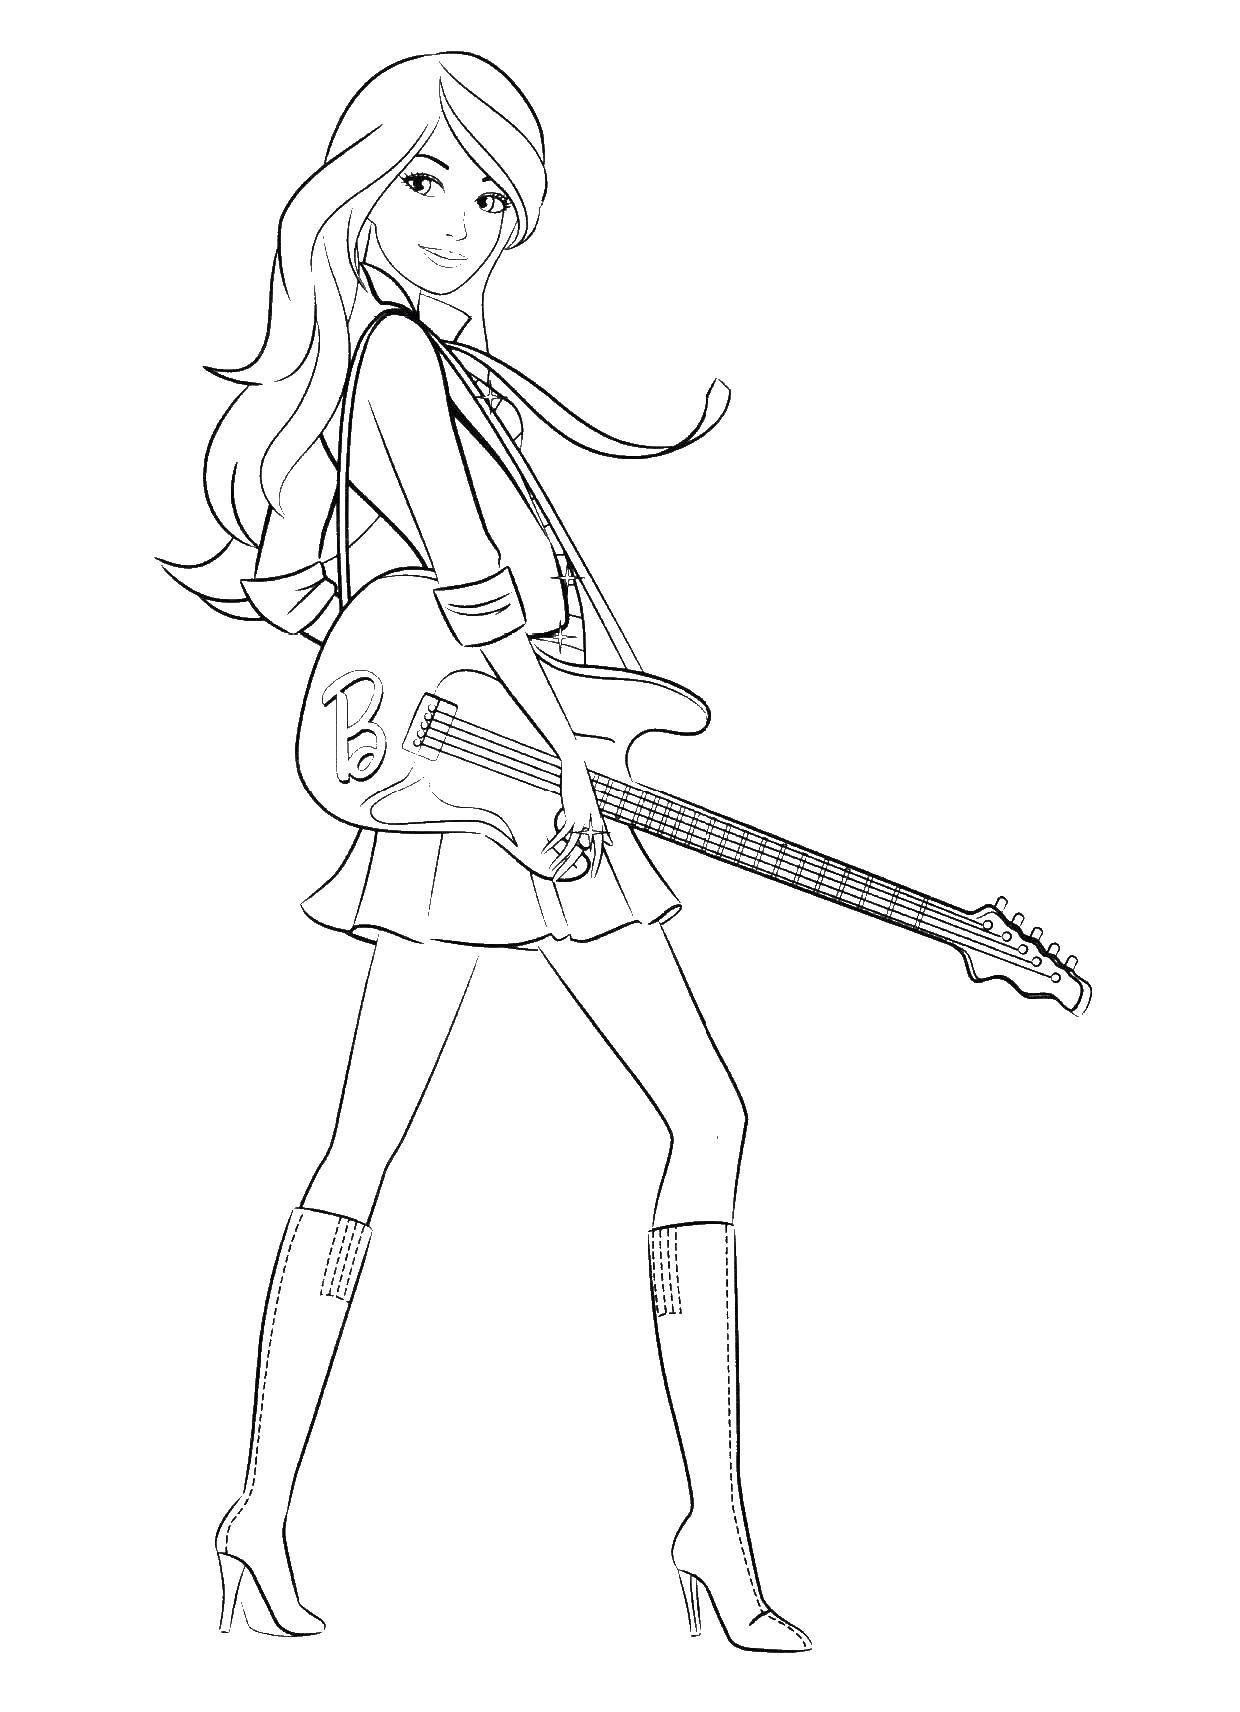 Название: Раскраска Барби музыкант. Категория: Барби. Теги: барби, гитара.